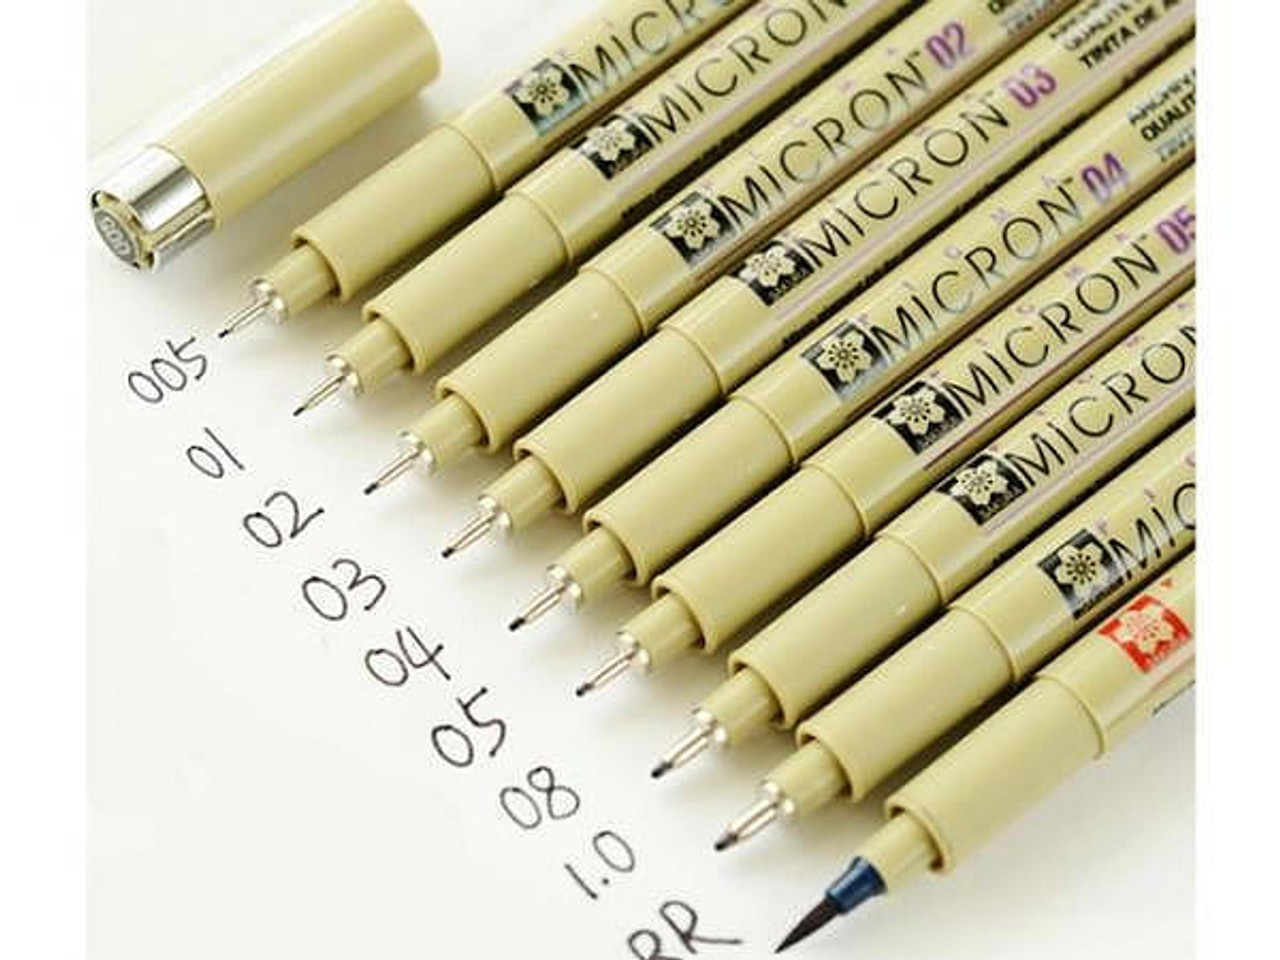 Sakura Pigma Micron Pen Black - Choose Your Size